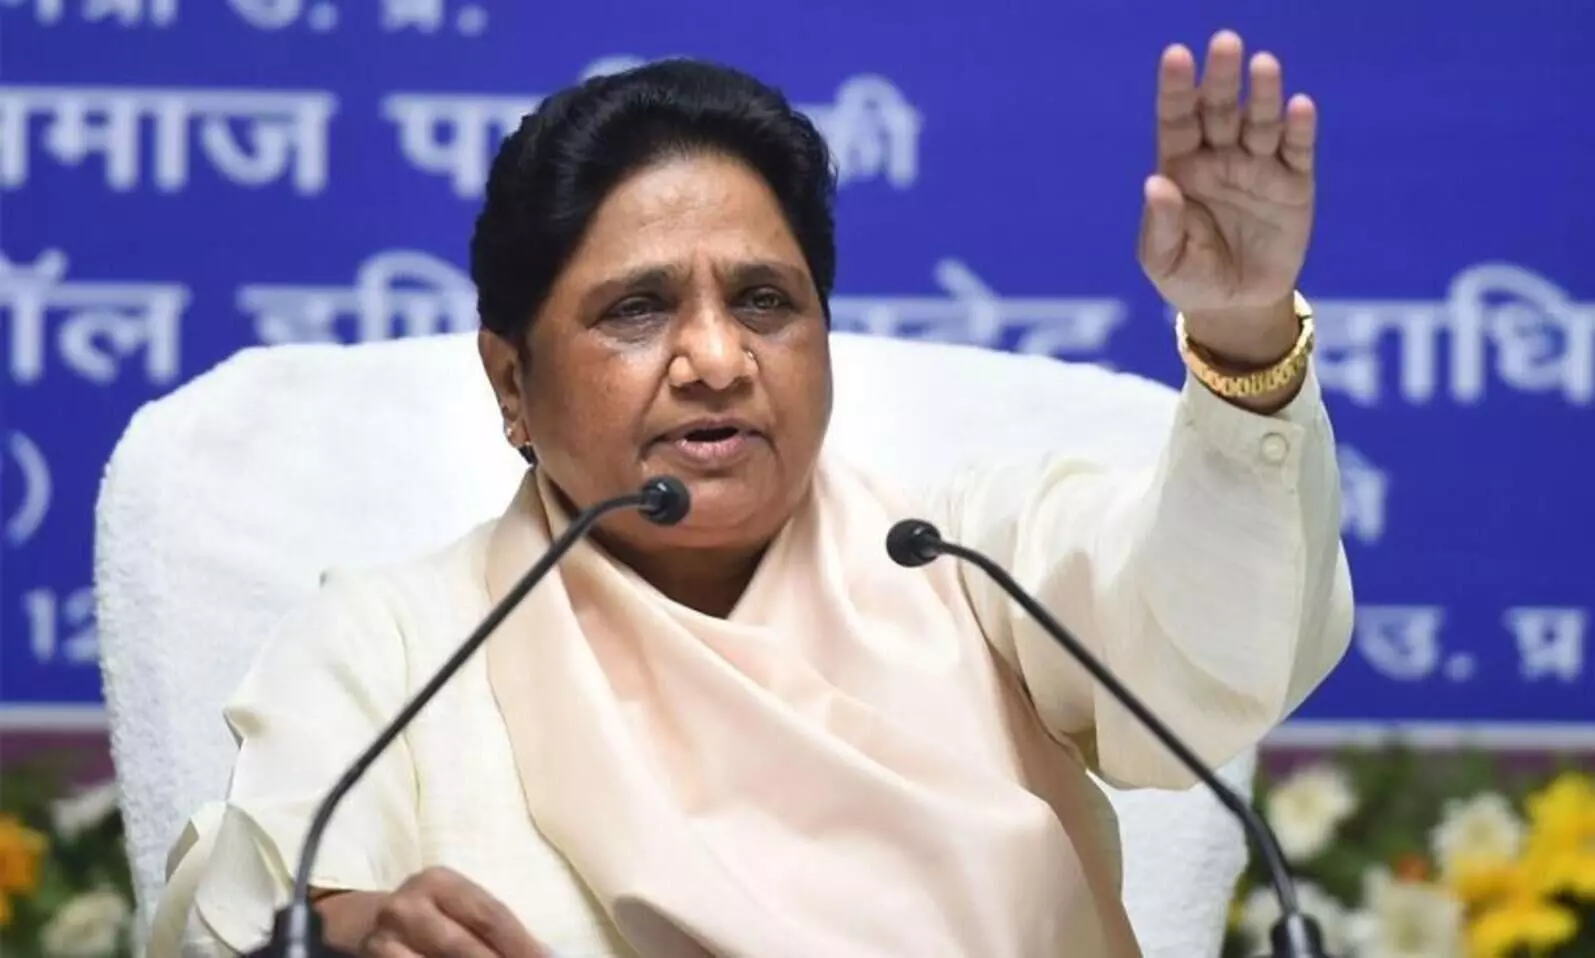 Mayawati backs NDA candidate Droupadi Murmu in presidential polls